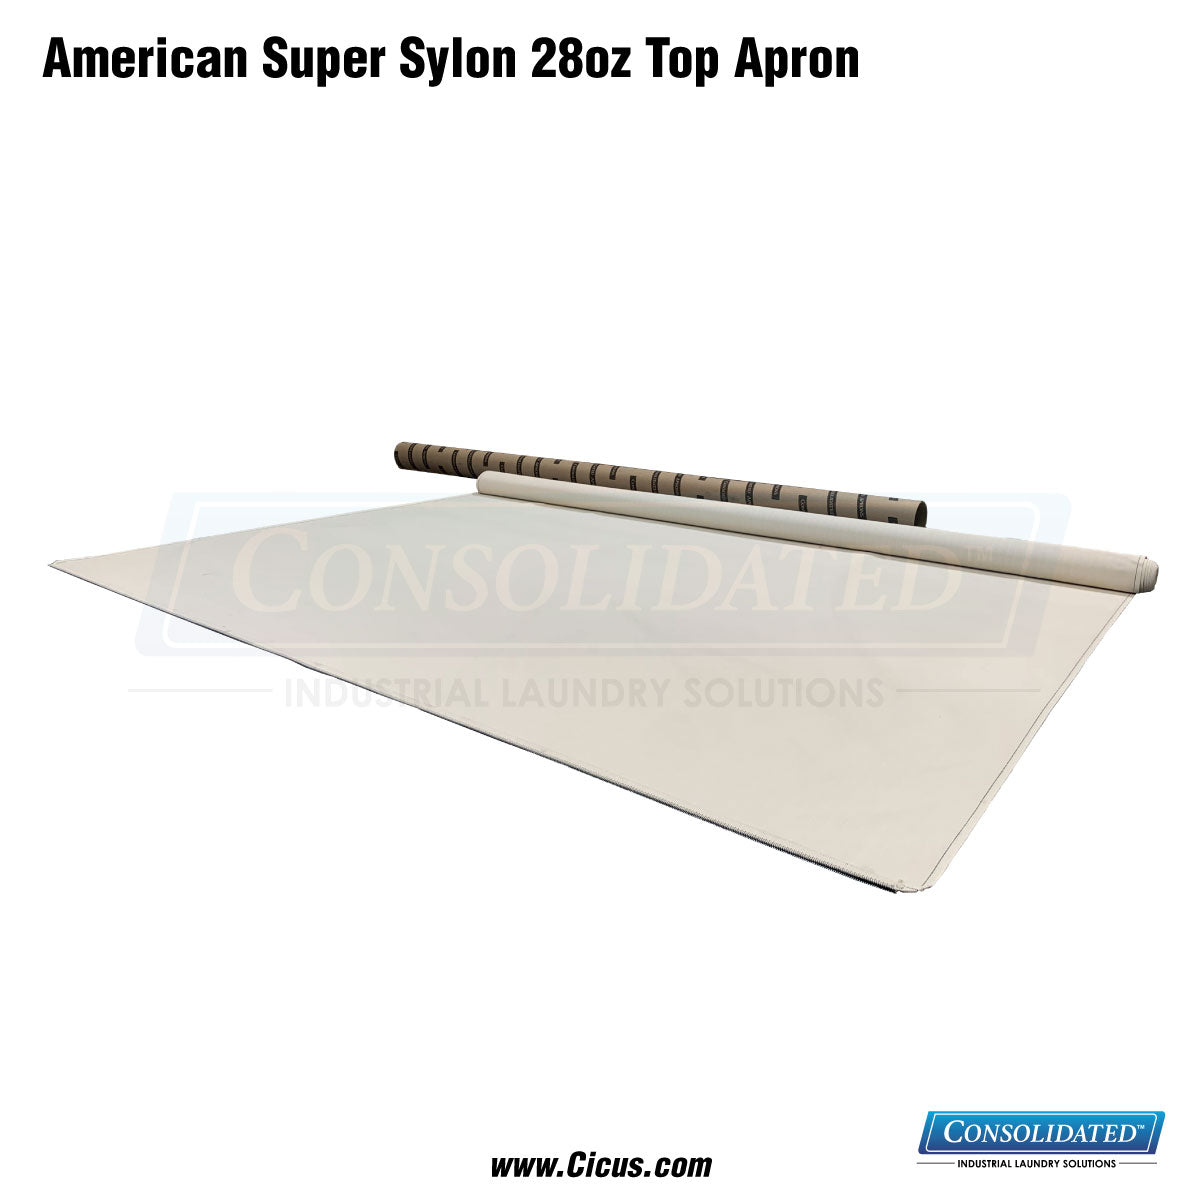 American Laundry Machinery Super Sylon 28oz Ironer Apron